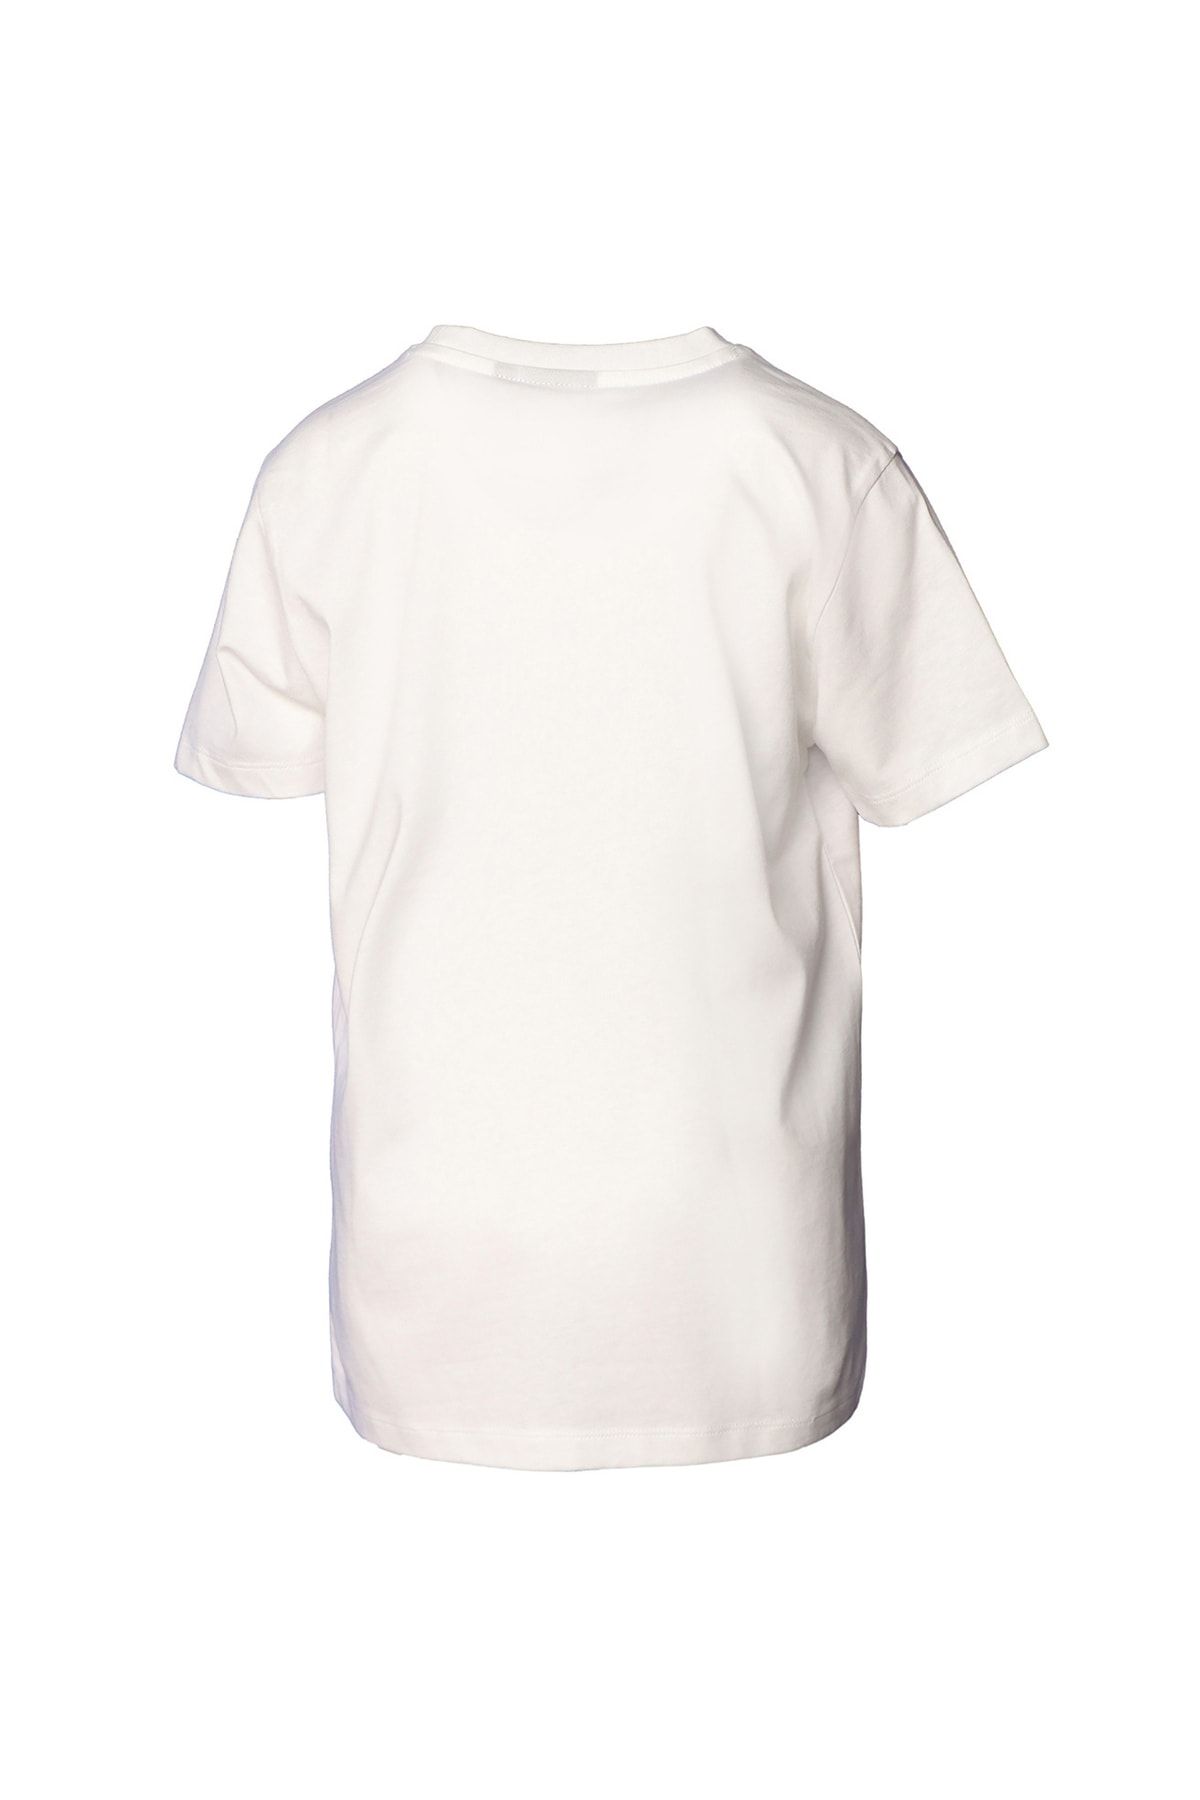 hummel تی شرت پسر سفید شکسته چاپ شده 911673-9003 HMLNEME S/S